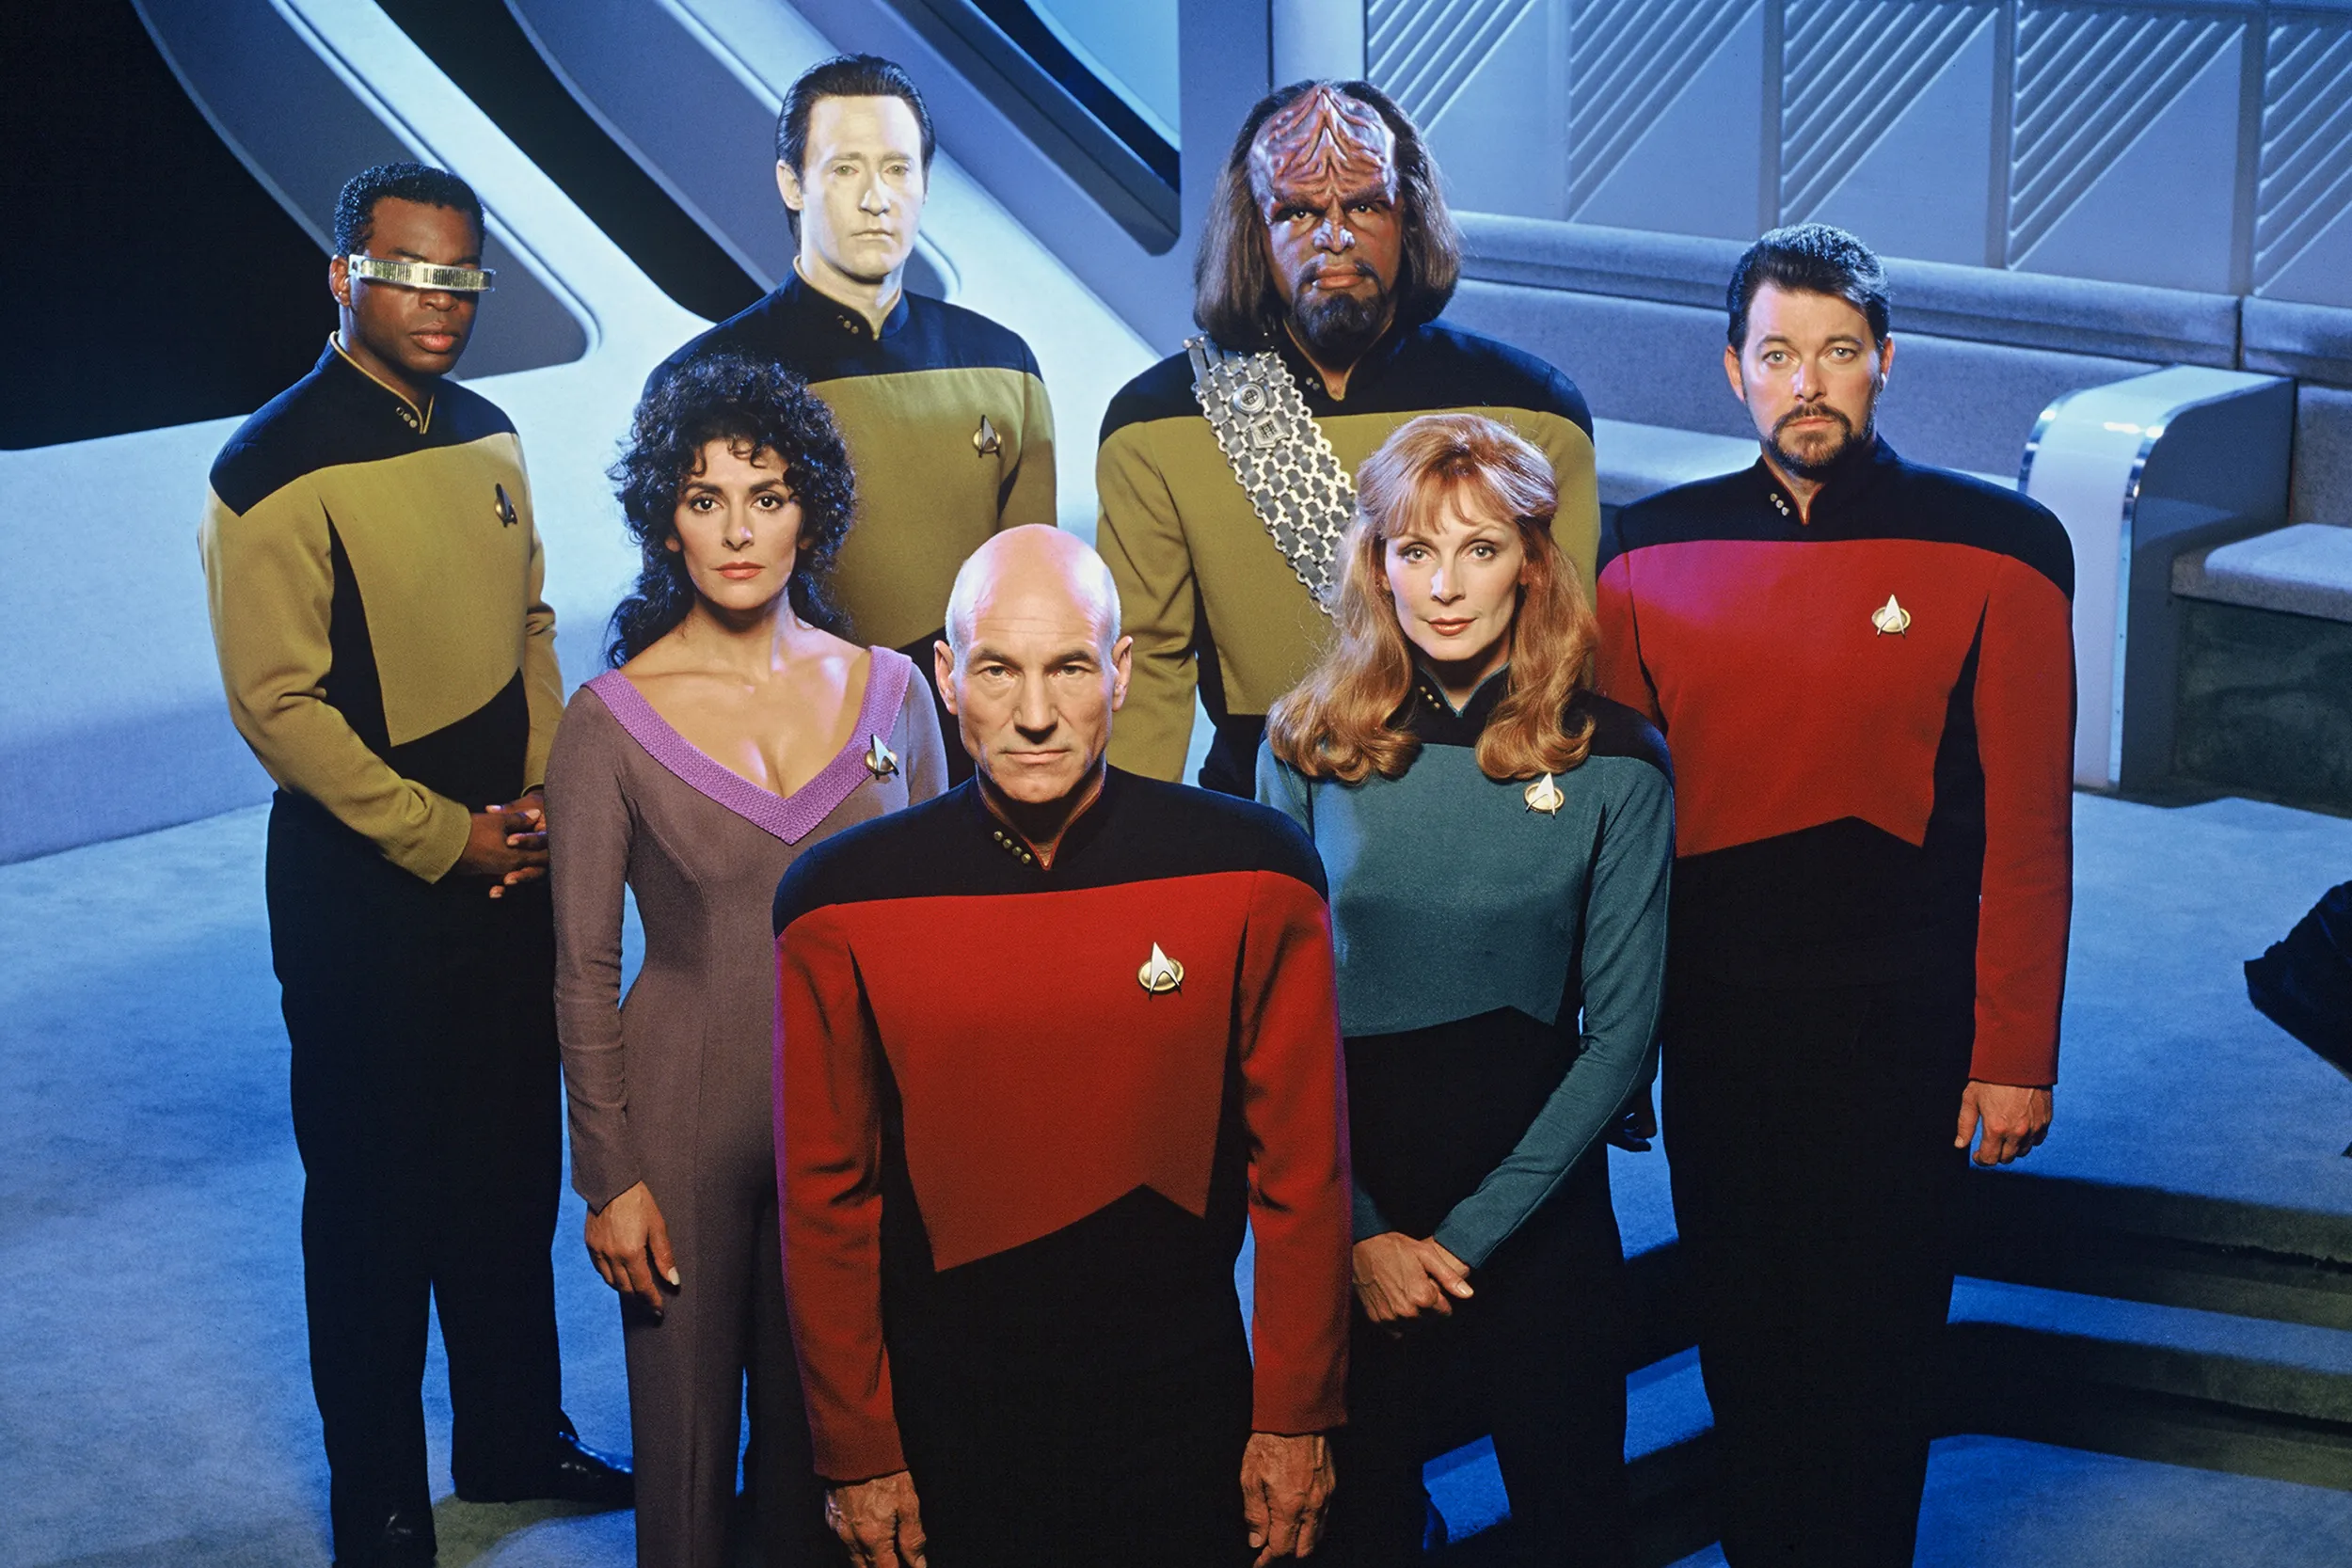 Star Trek the Next Generation cast